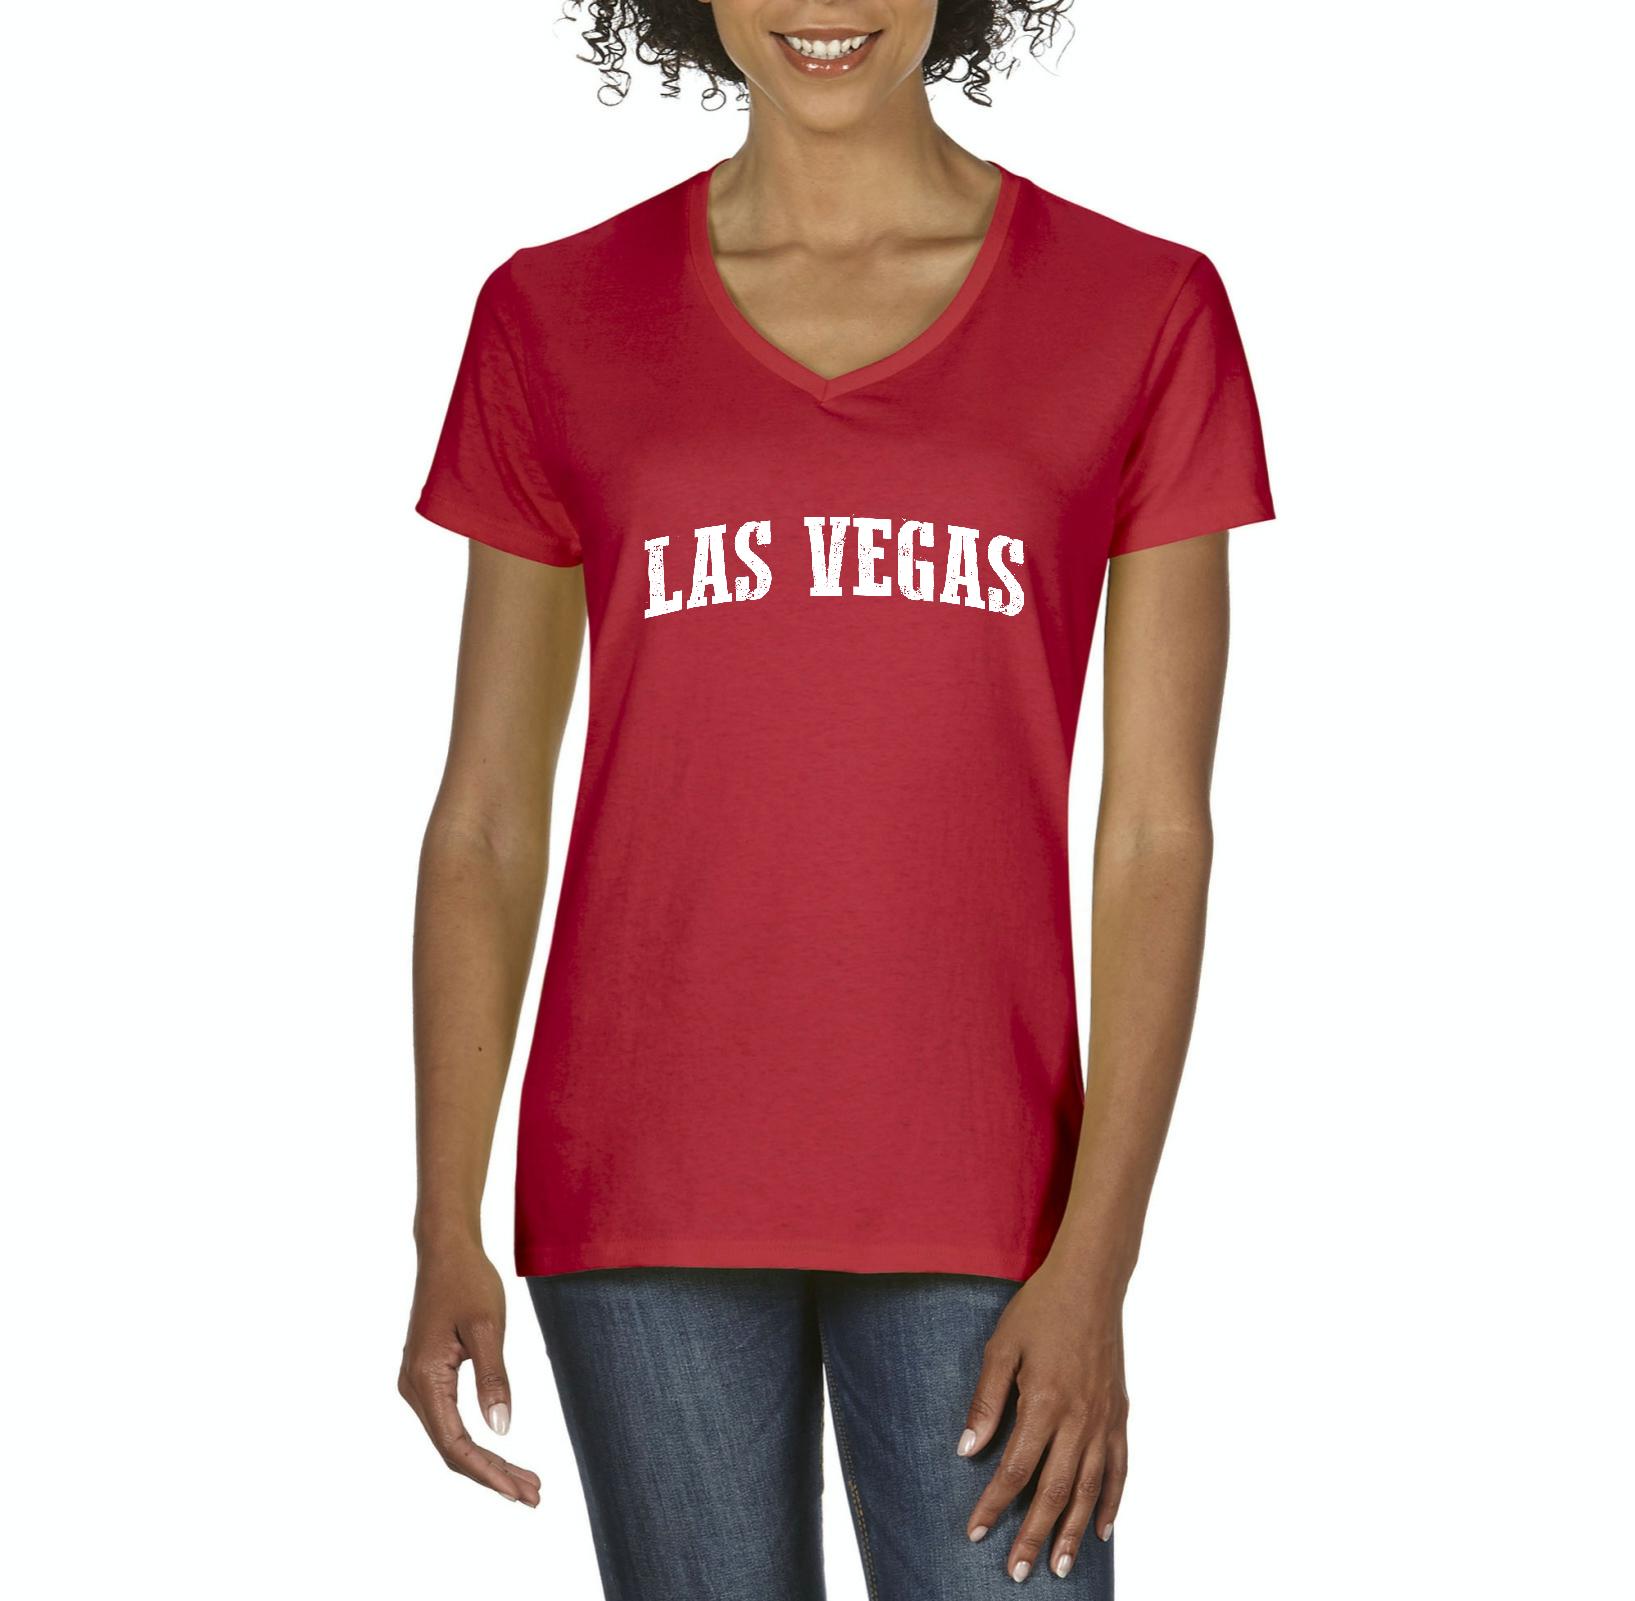 IWPF - Women's T-Shirt V-Neck Short Sleeve - Las Vegas Nevada - image 1 of 5